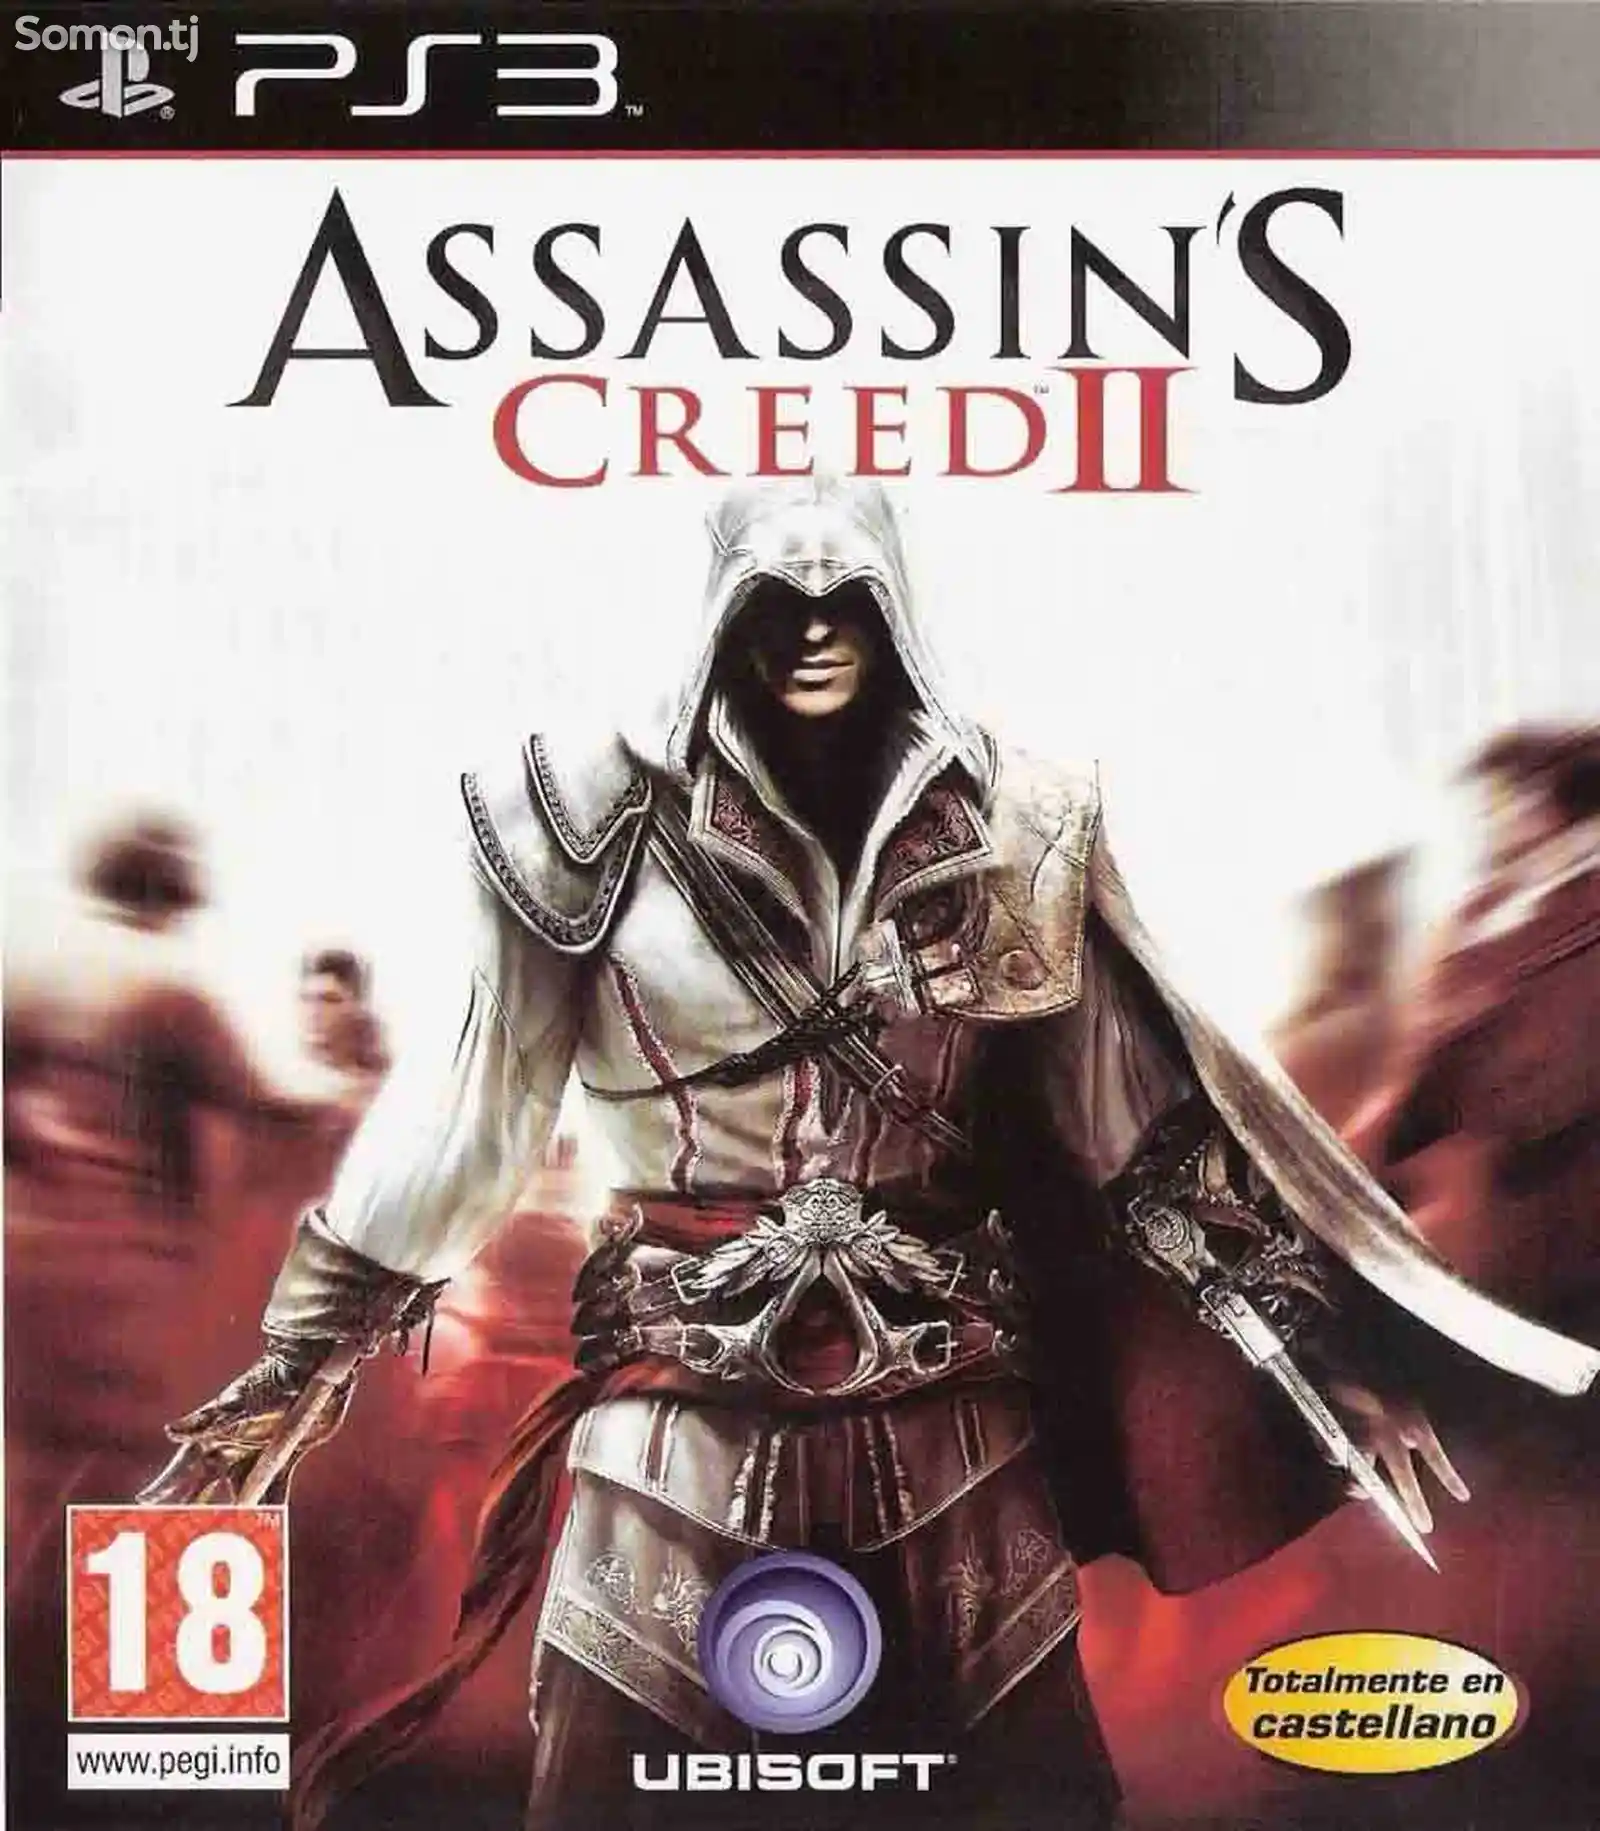 Игра Assassin's Creed 2 на всех моделей Play Station-3